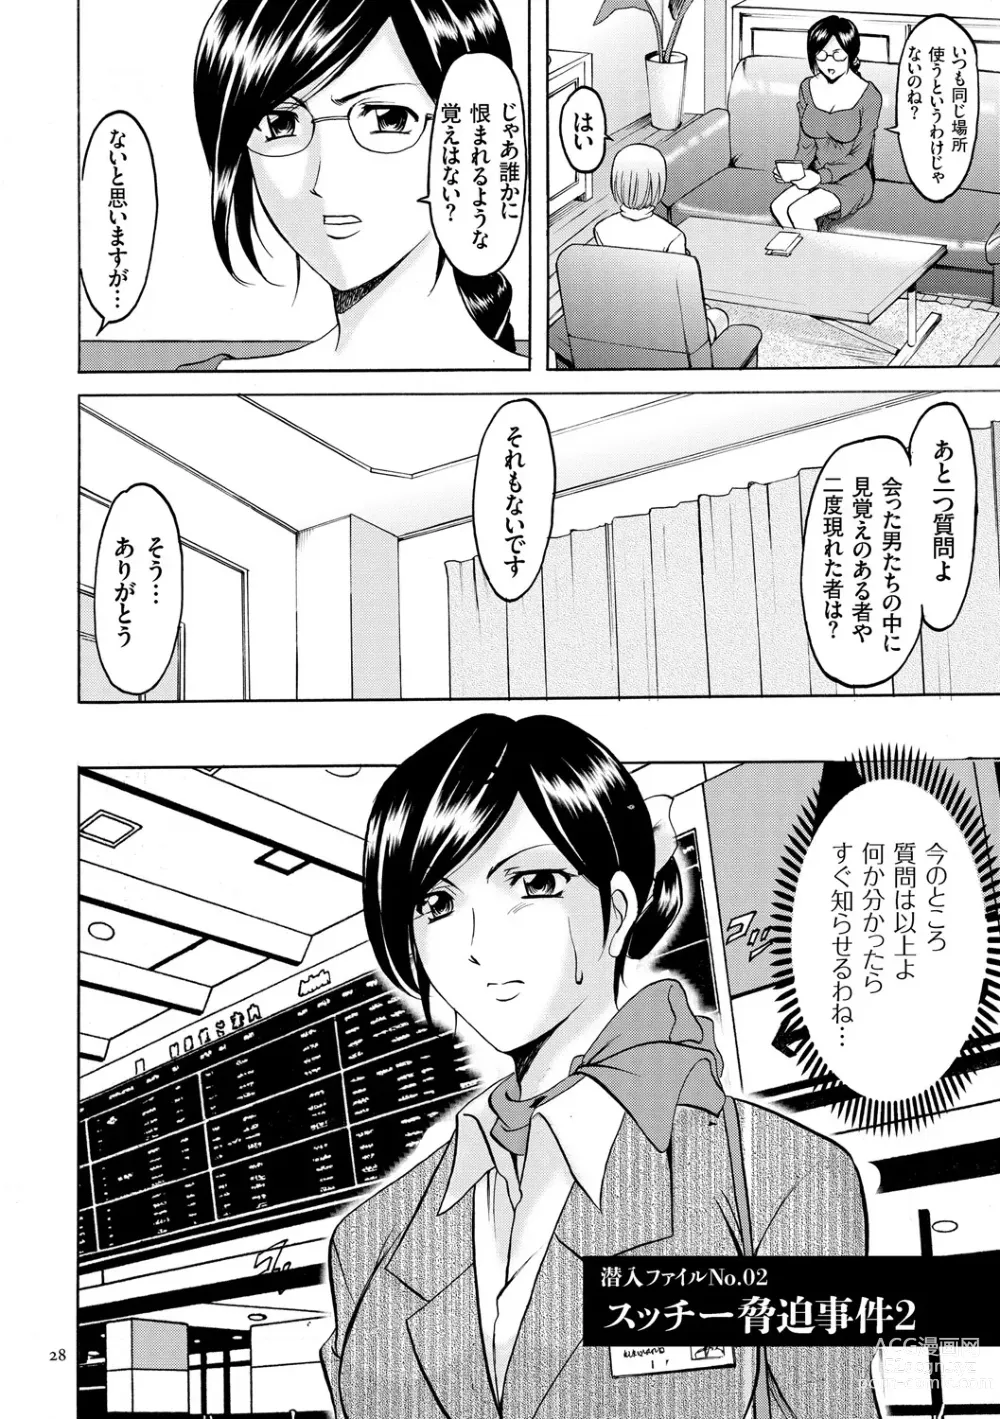 Page 28 of manga Sennyu Tsuma Satomi Kiroku